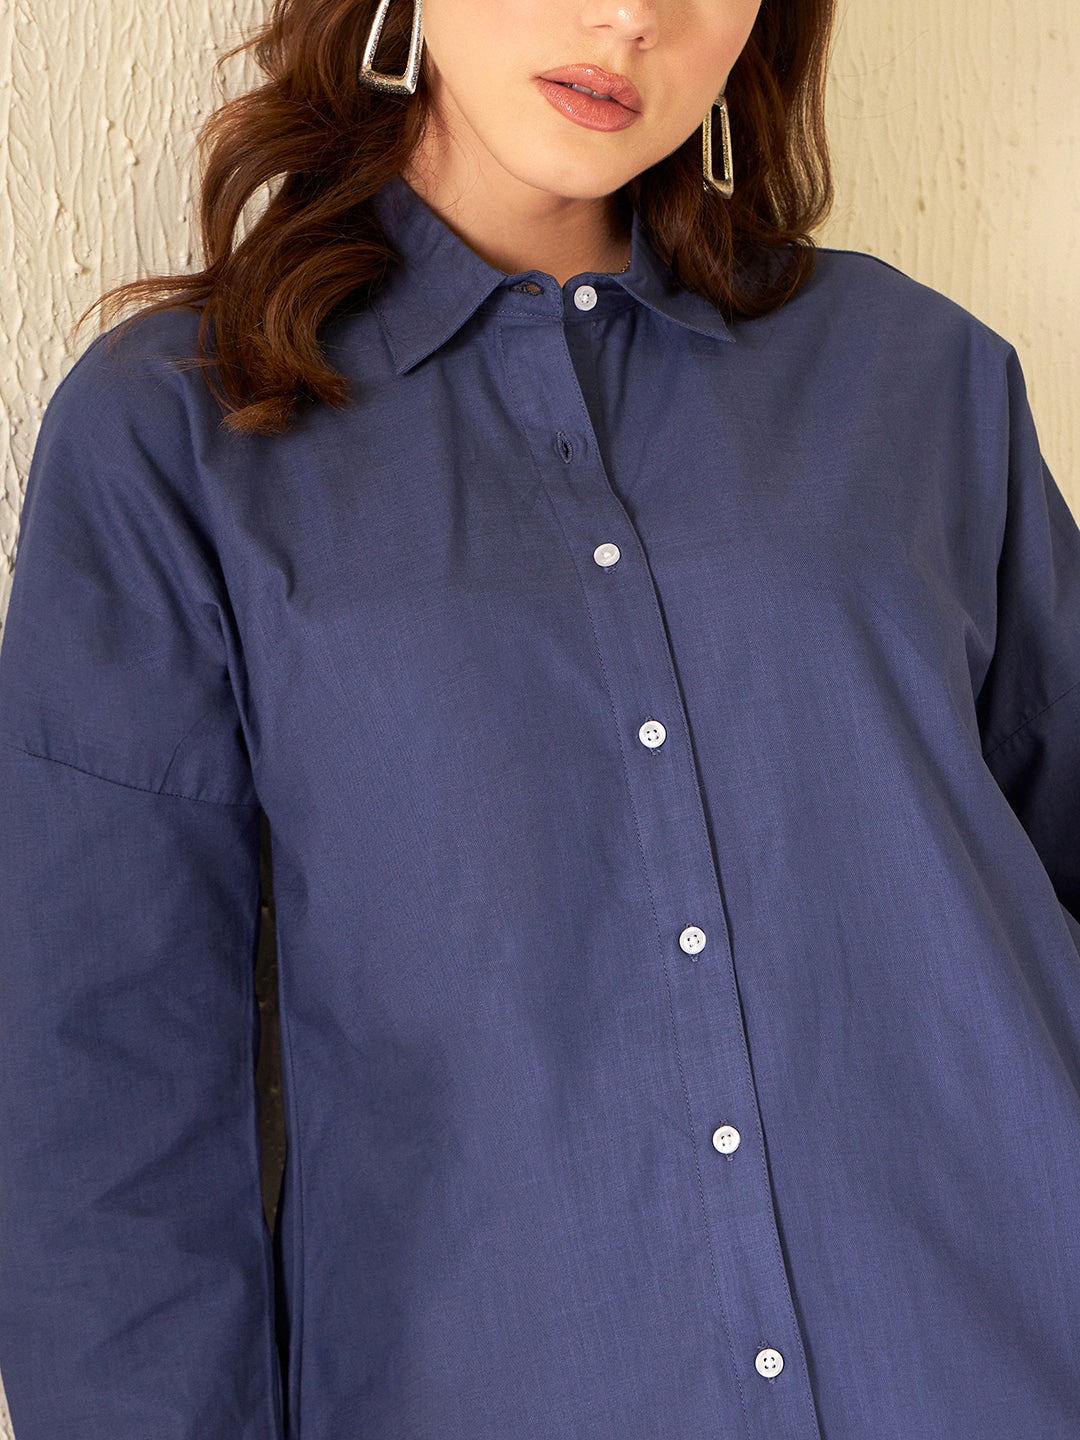 DENNISON Women Blue Smart Boxy Opaque Casual Shirt